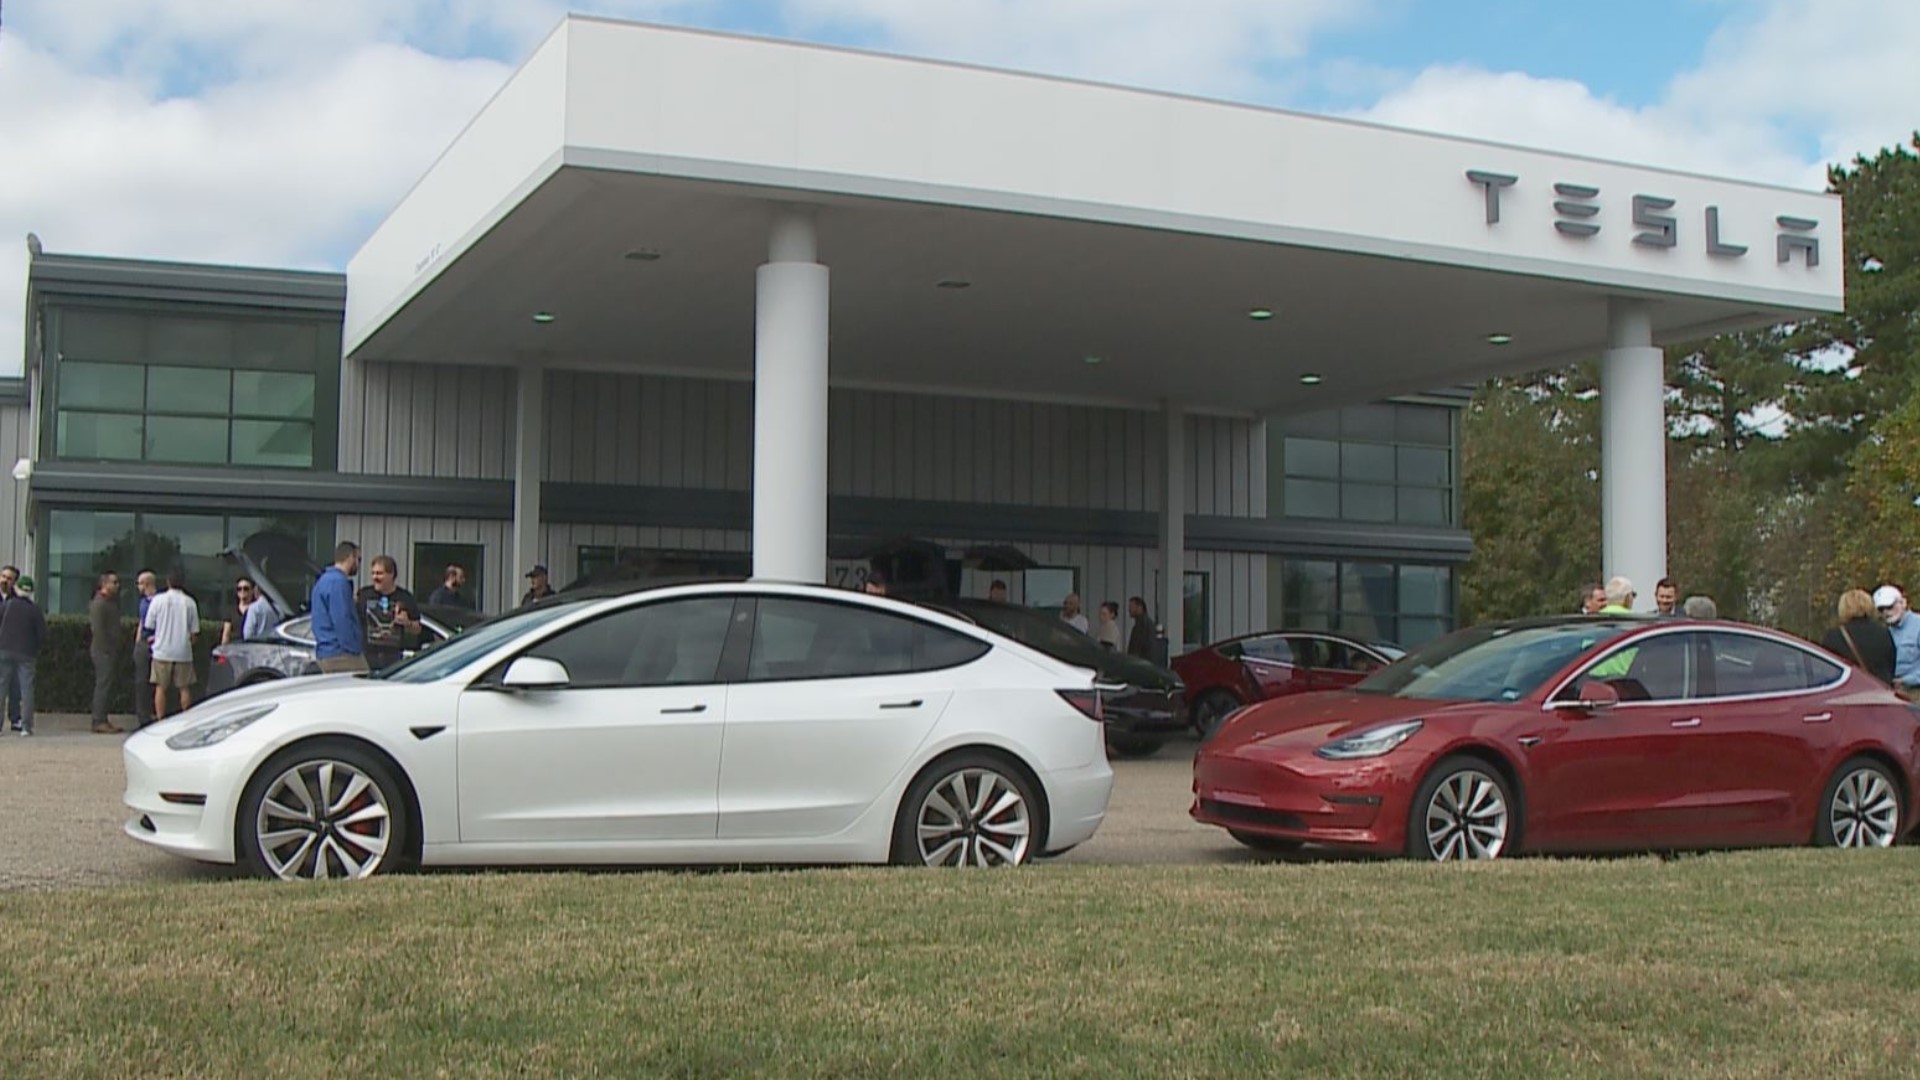 Tesla opens new service center in Virginia Beach | 13newsnow.com